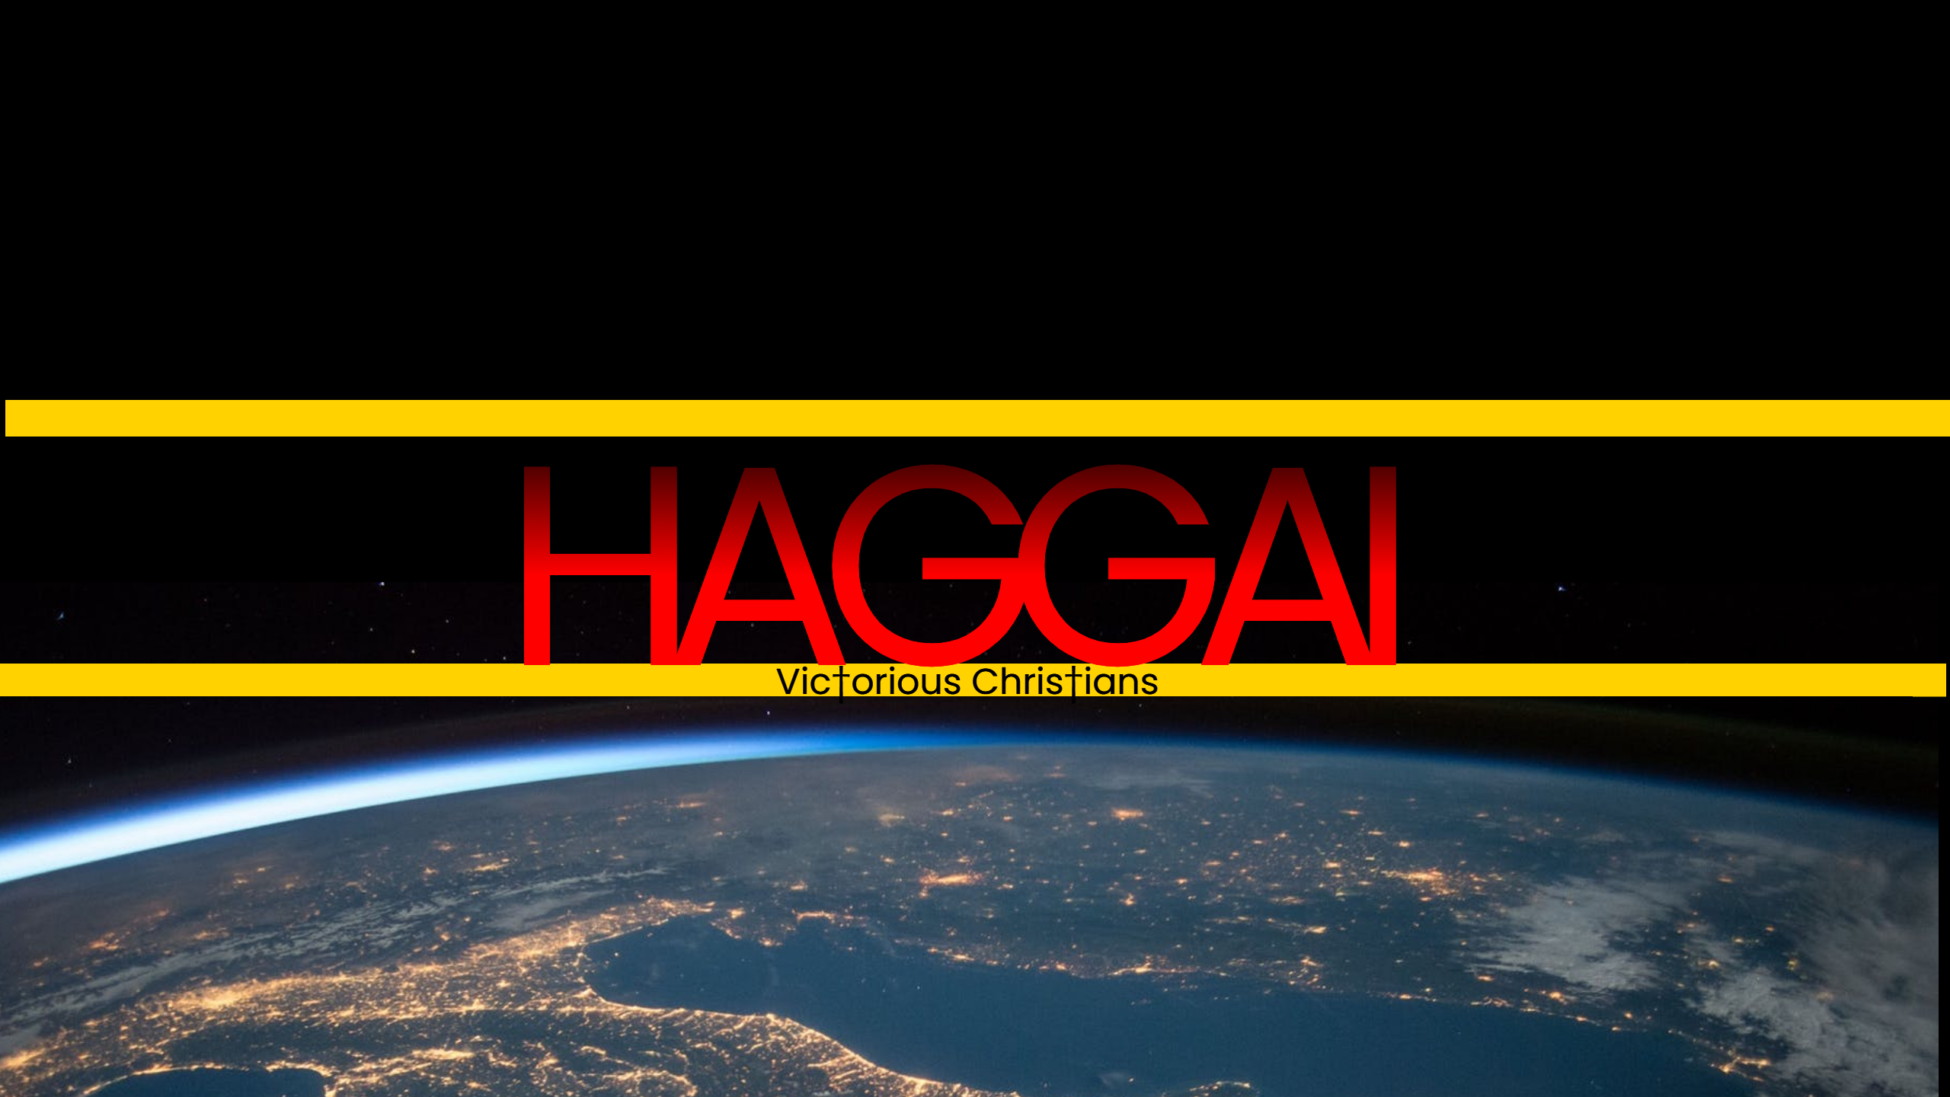 Book of Haggai